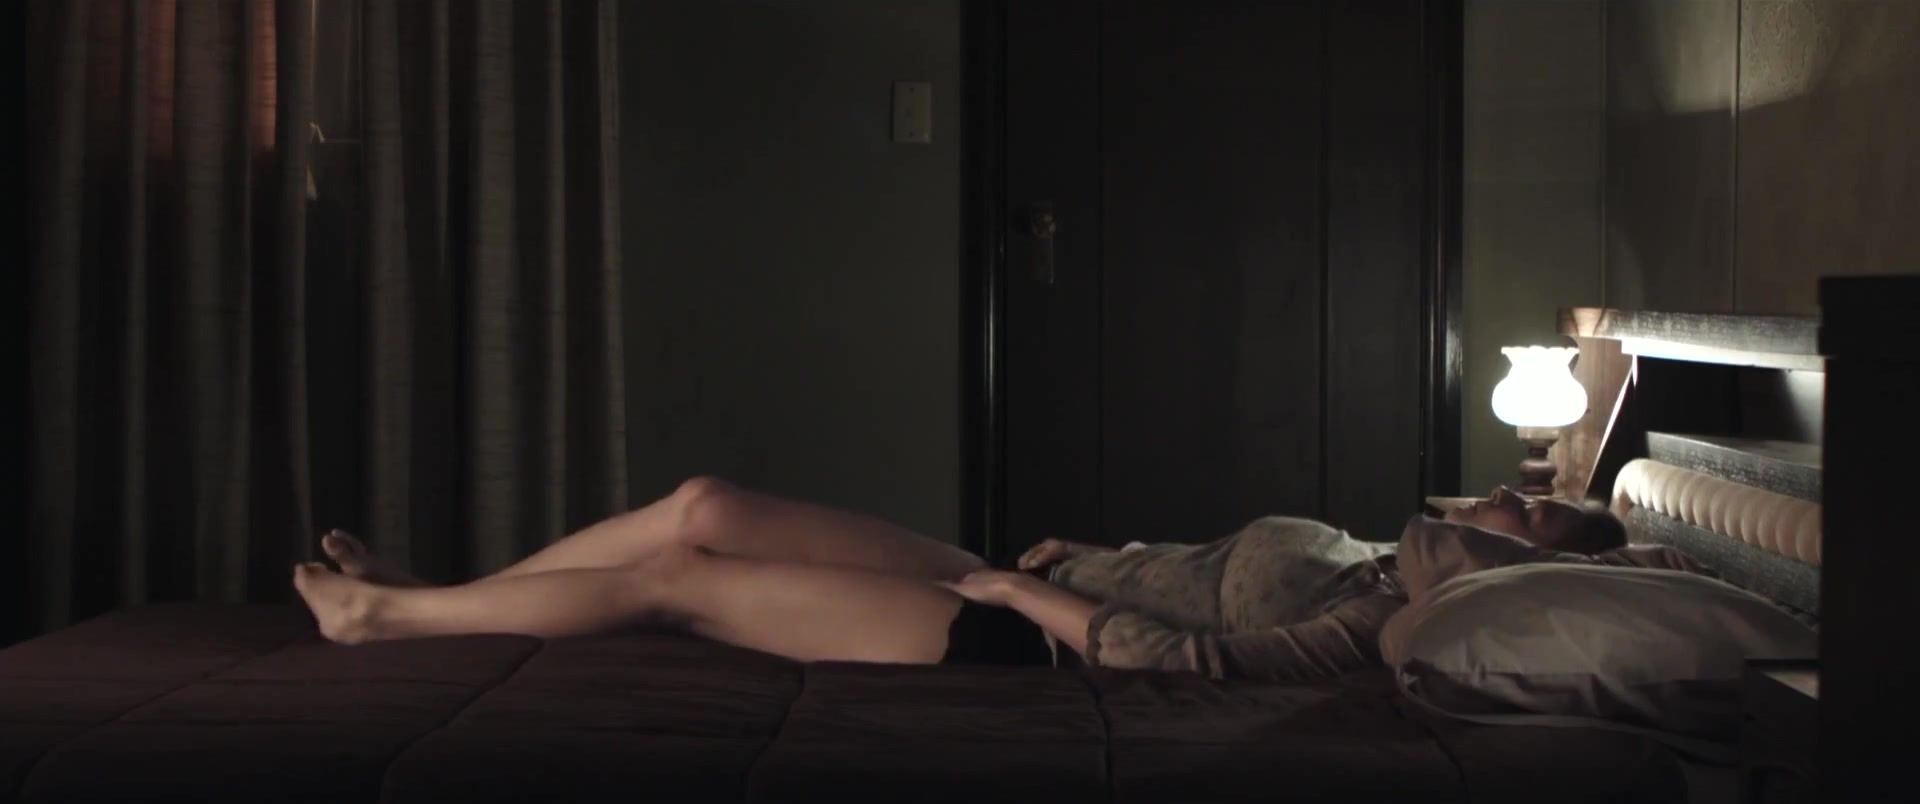 Homo Sex video Leeanna Walsman Nude - Dawn (2015) Porn